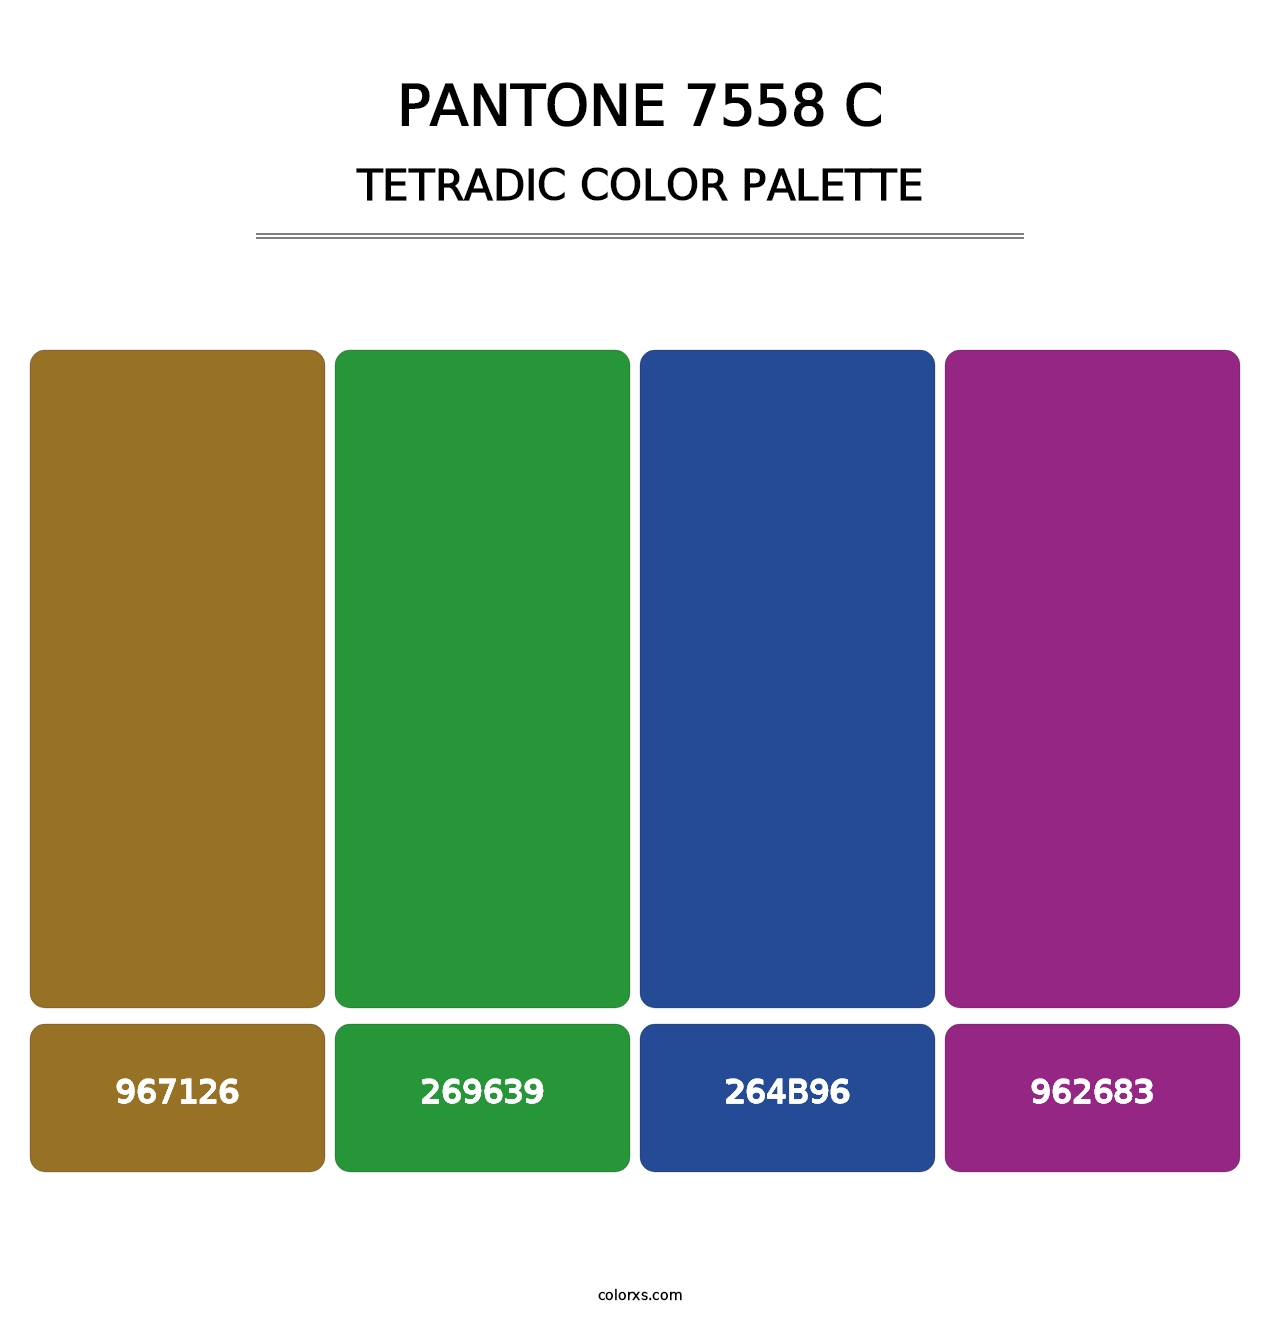 PANTONE 7558 C - Tetradic Color Palette